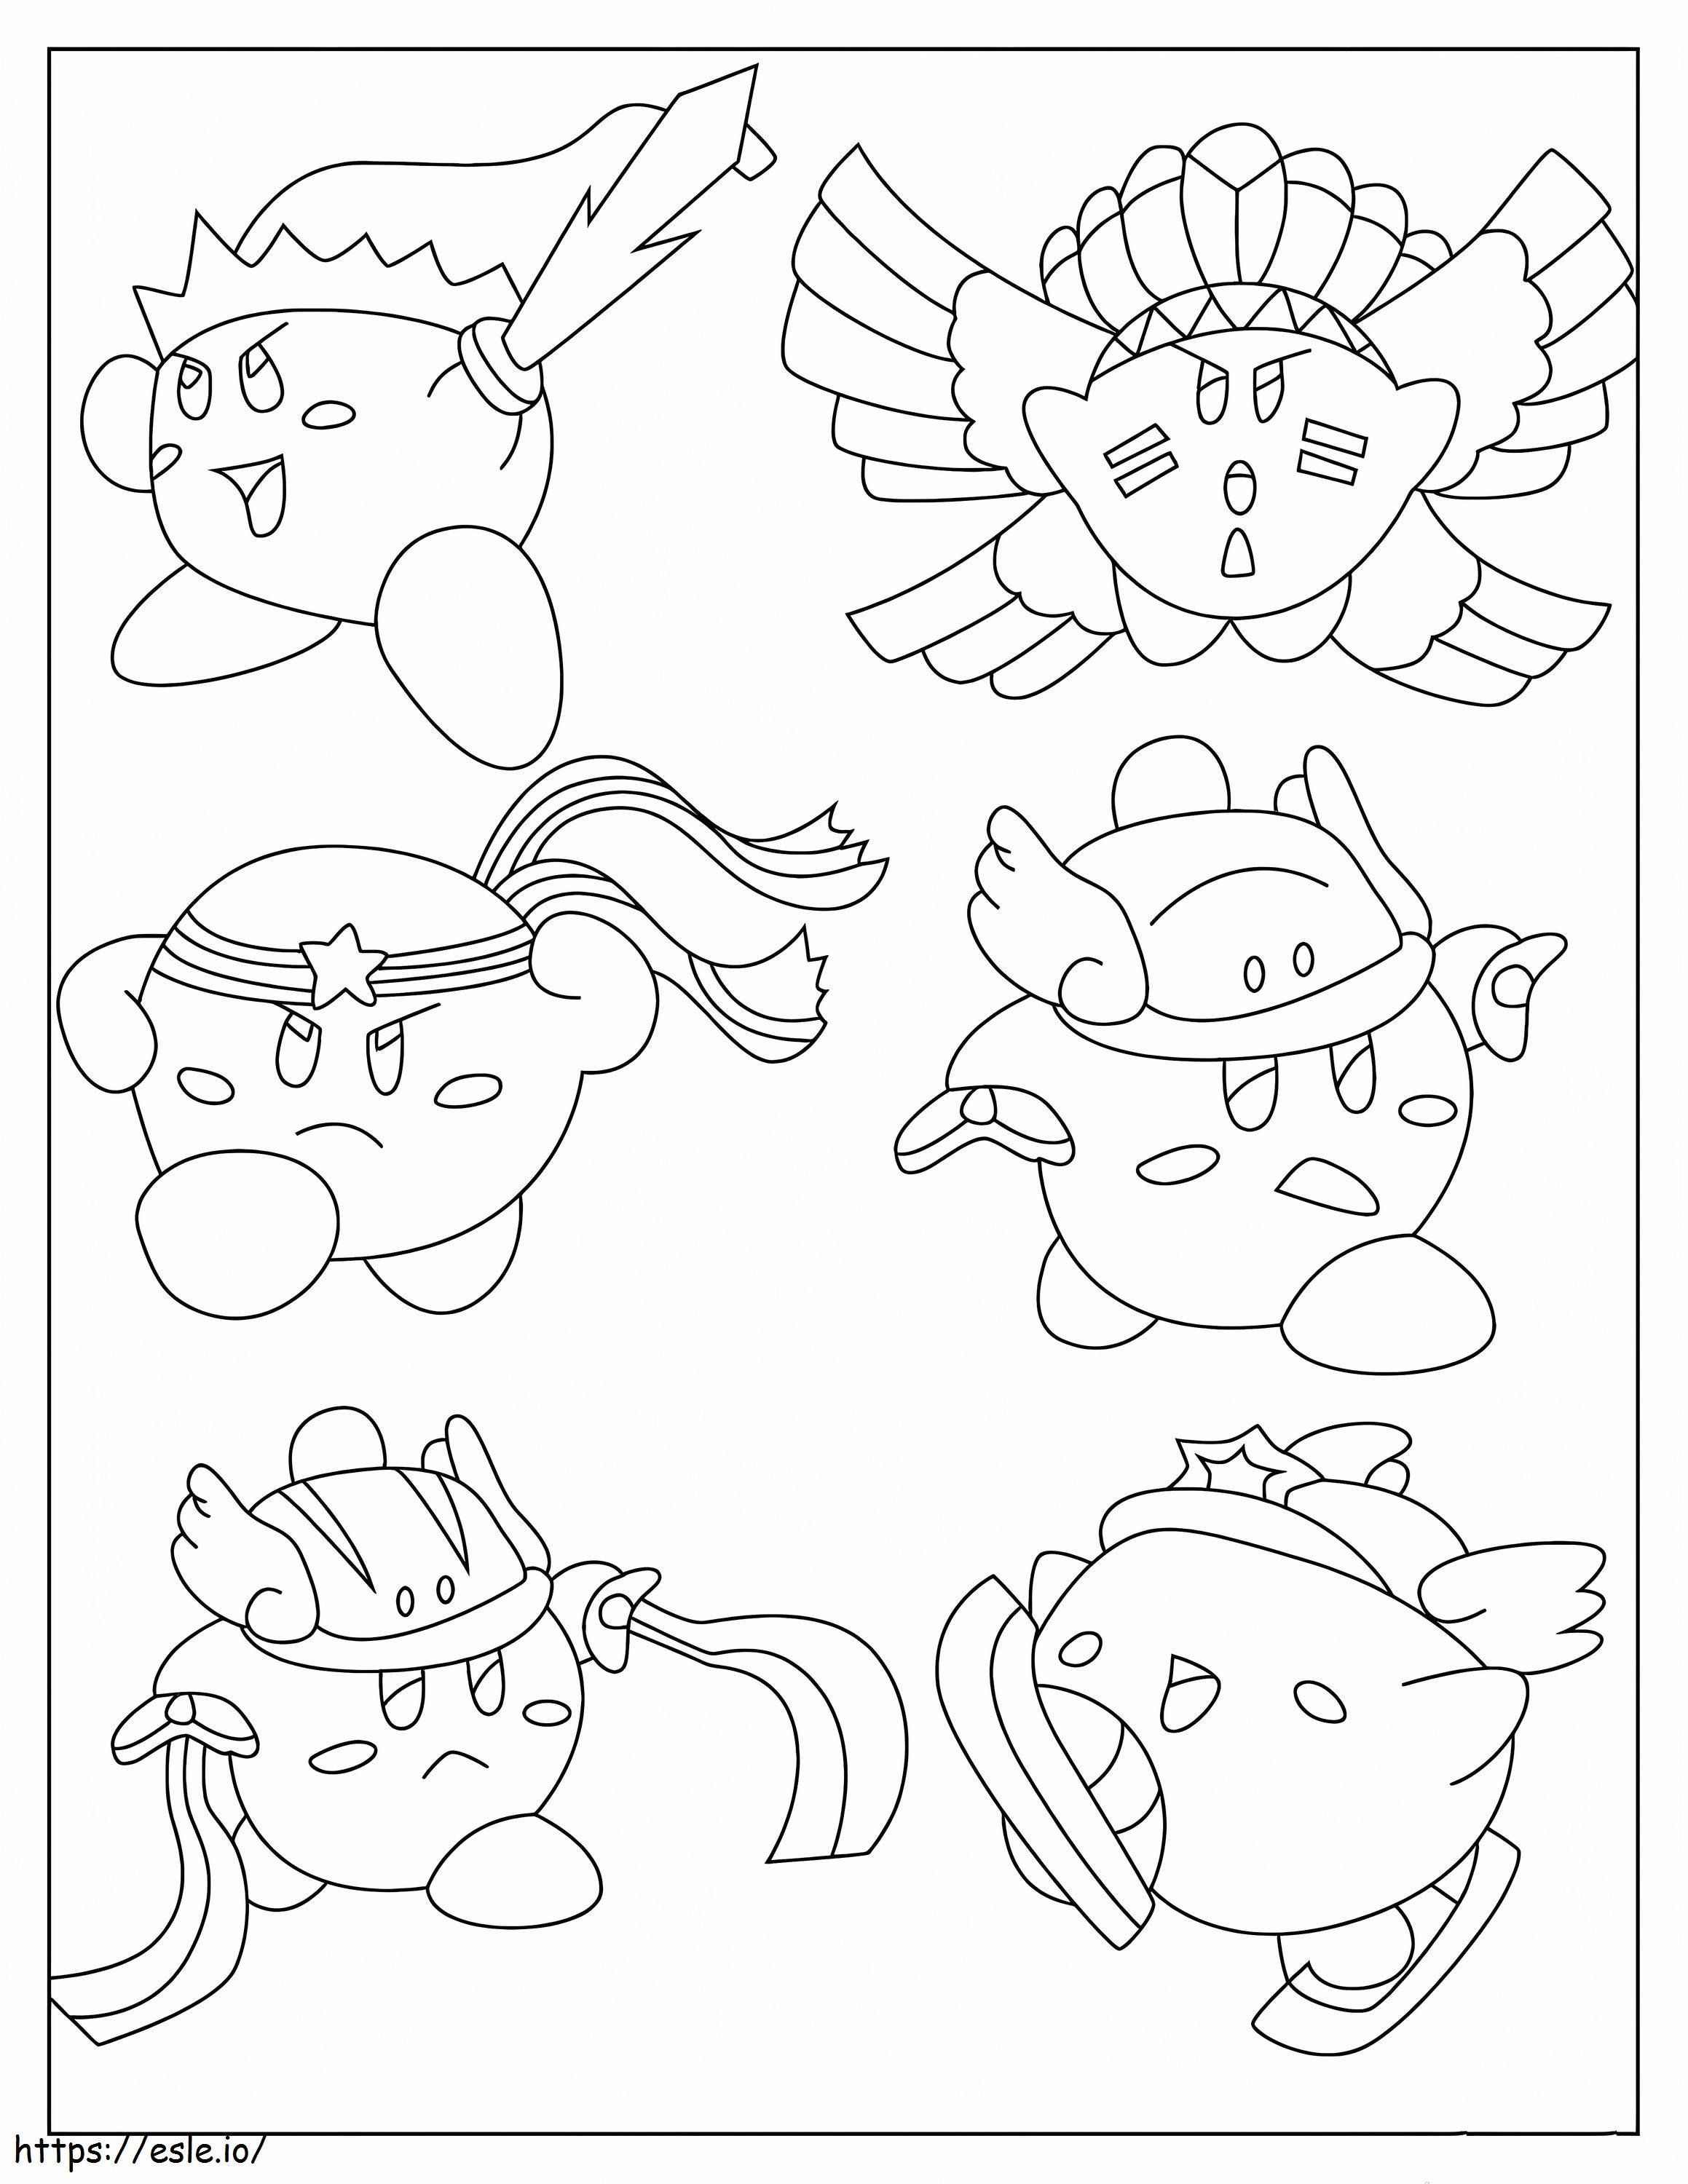 Coloriage Six skins Kirby à imprimer dessin